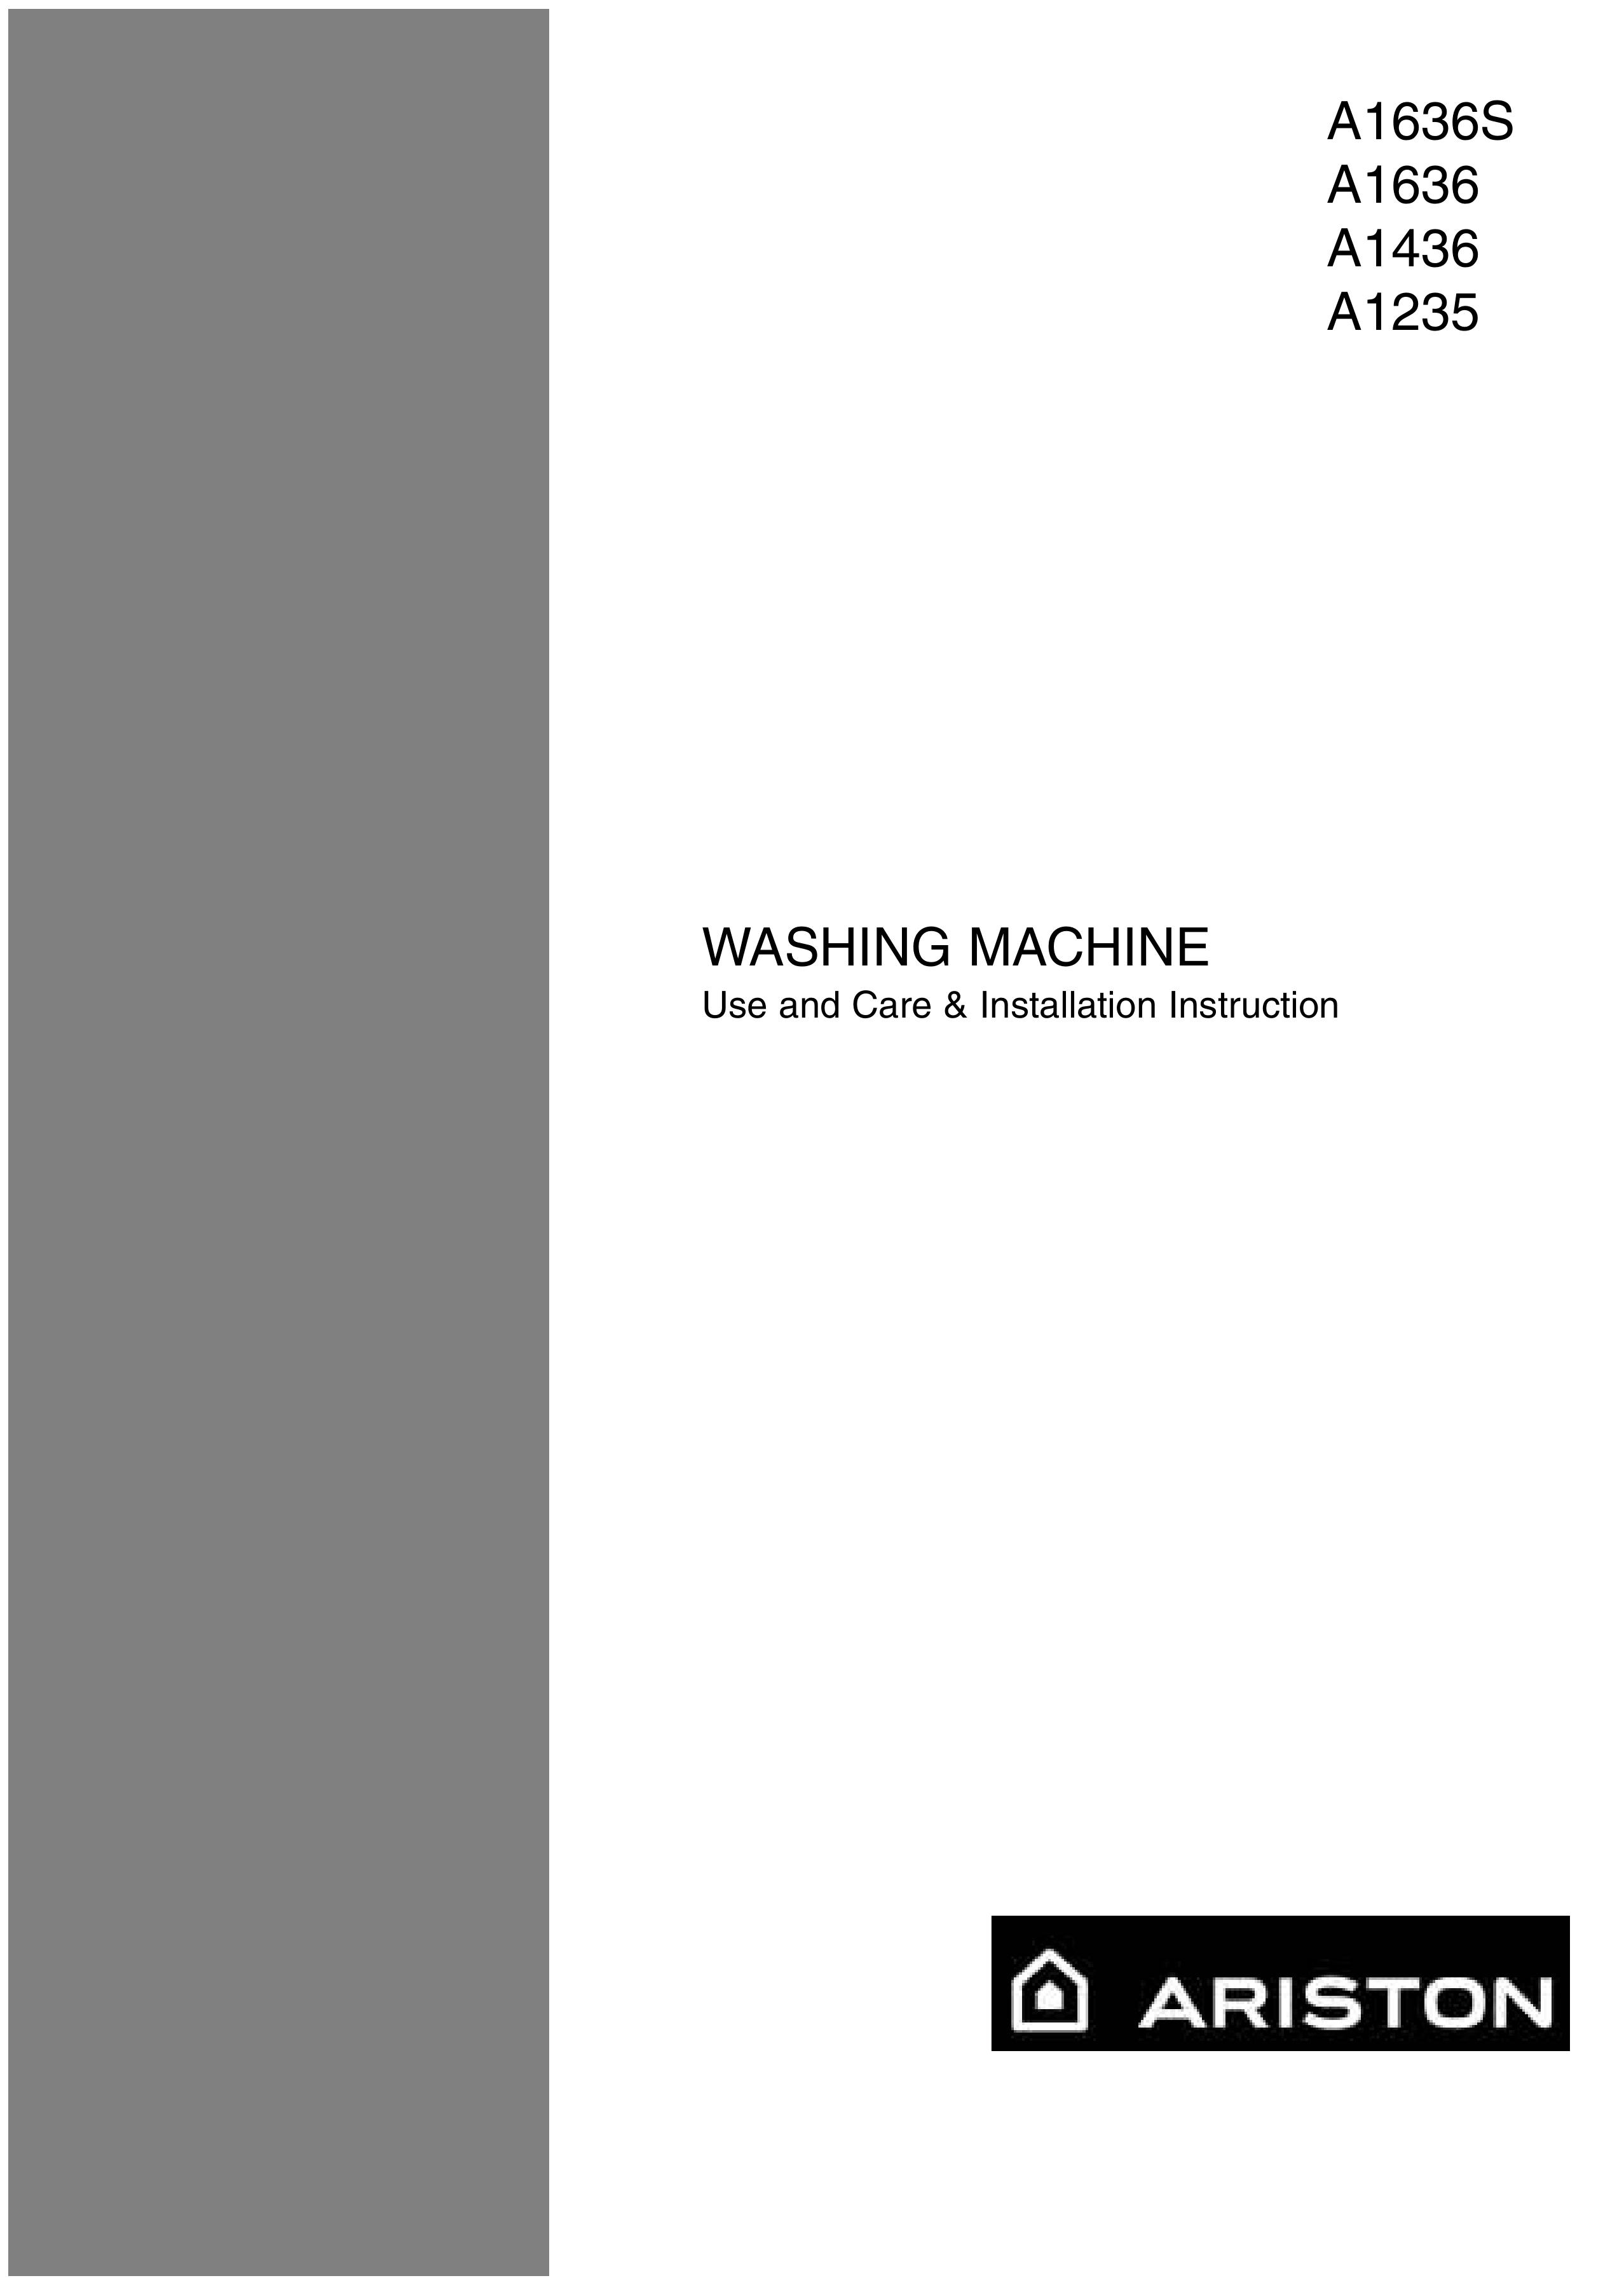 Ariston A1436 Washer User Manual